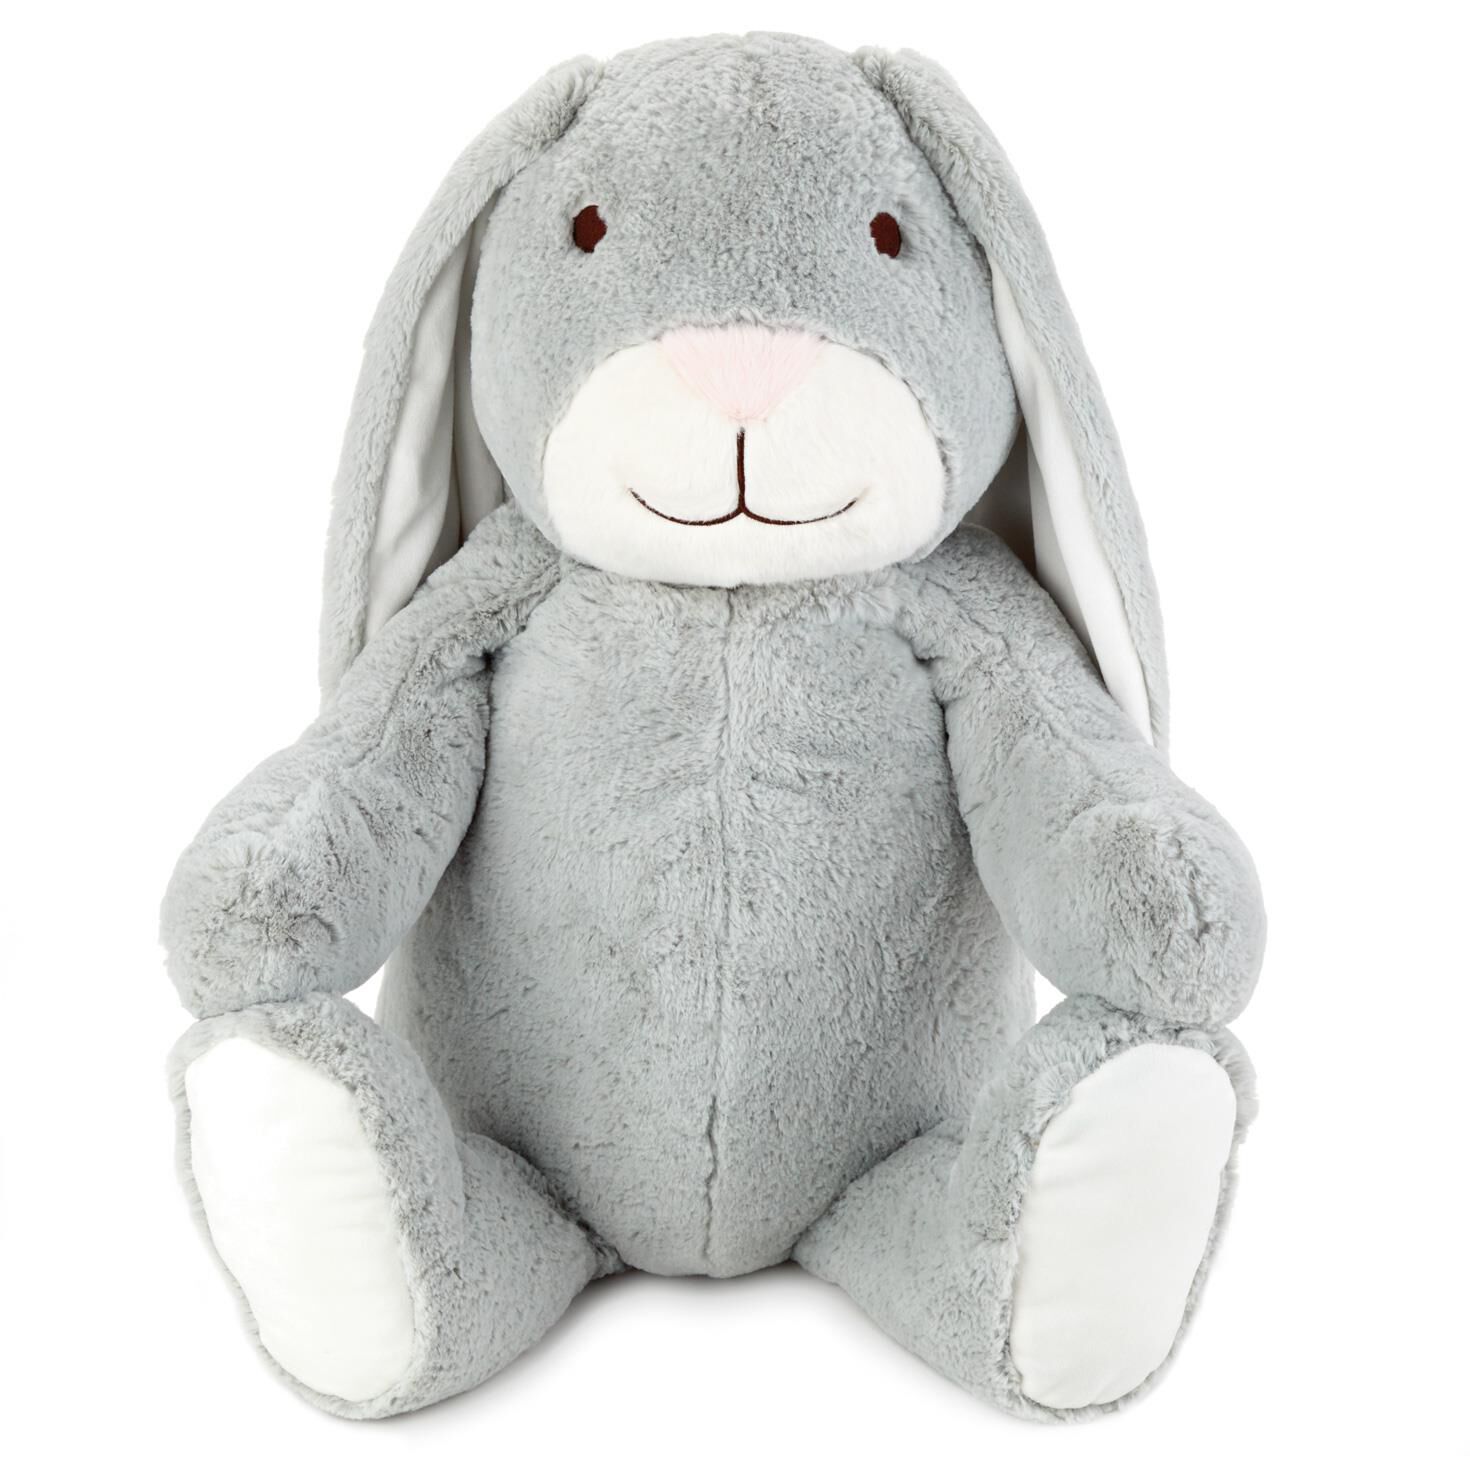 gray bunny stuffed animal